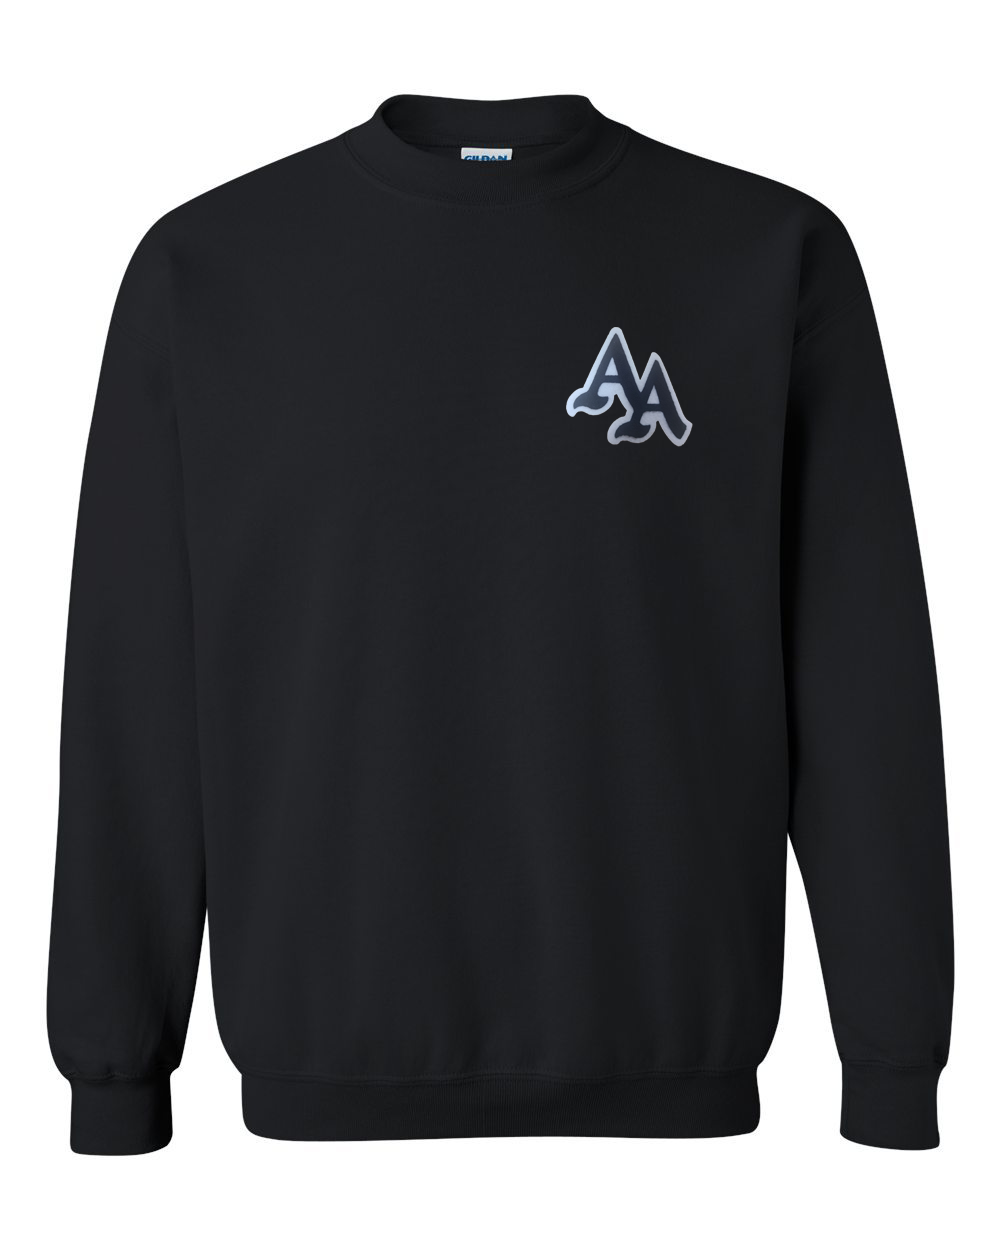 AA Crewneck Sweatshirt